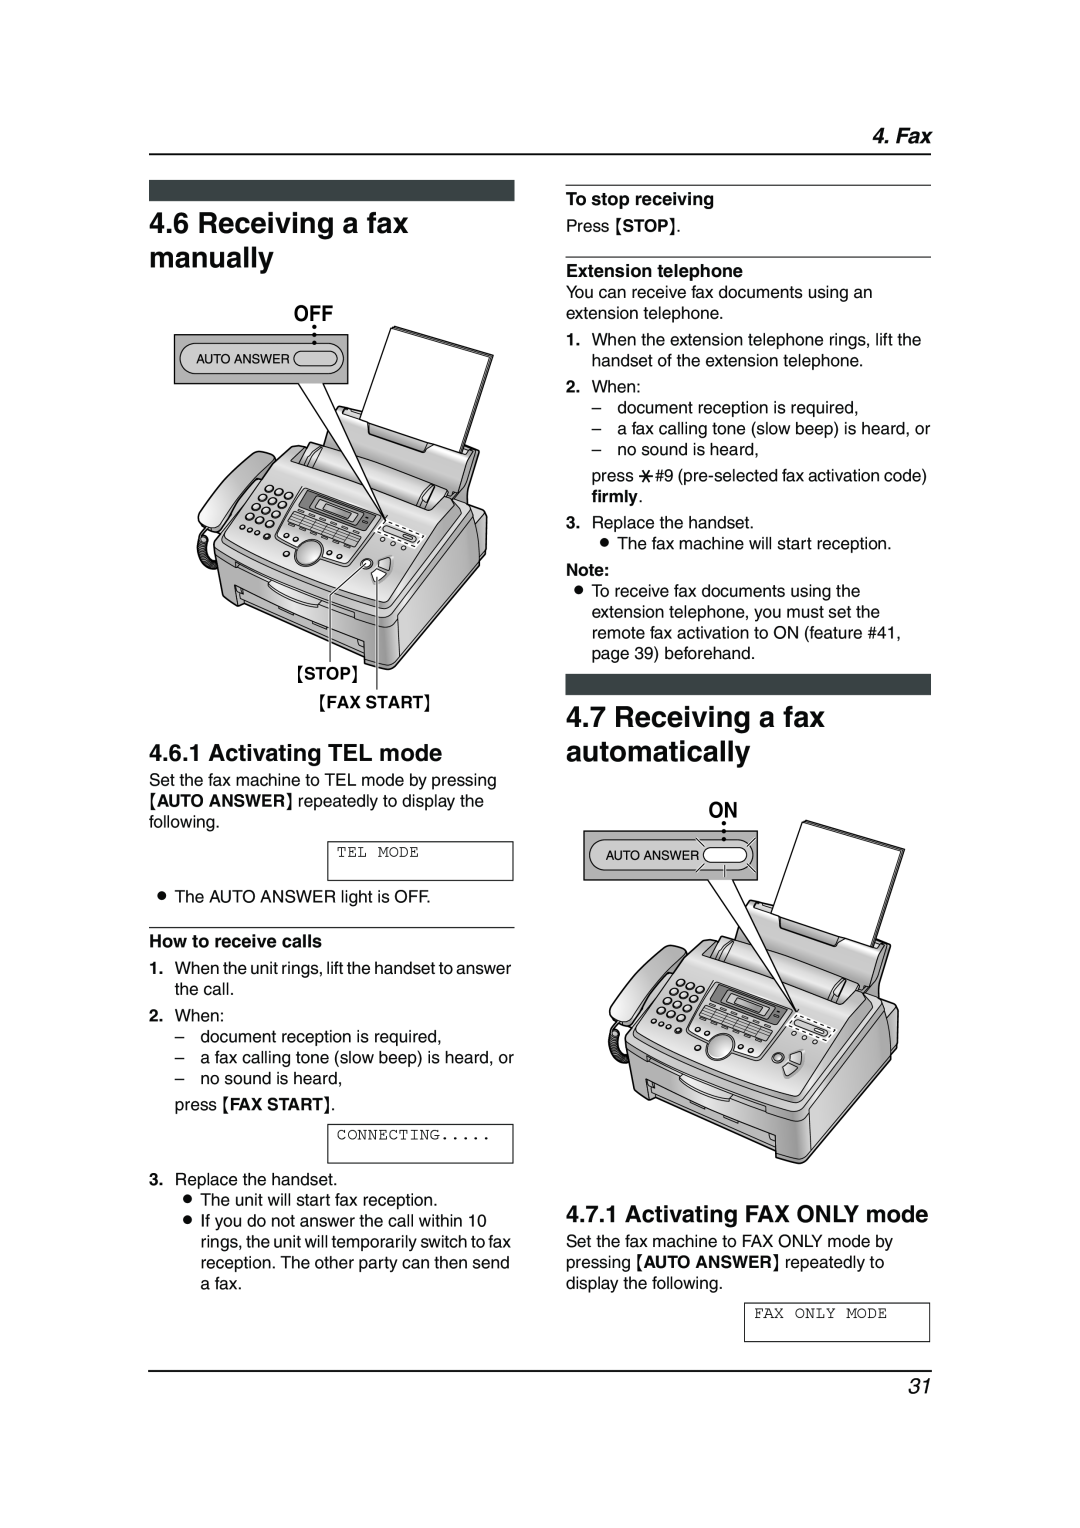 Panasonic KX-FL511AL Receiving a fax manually, Receiving a fax automatically, Activating TEL mode, Fax 